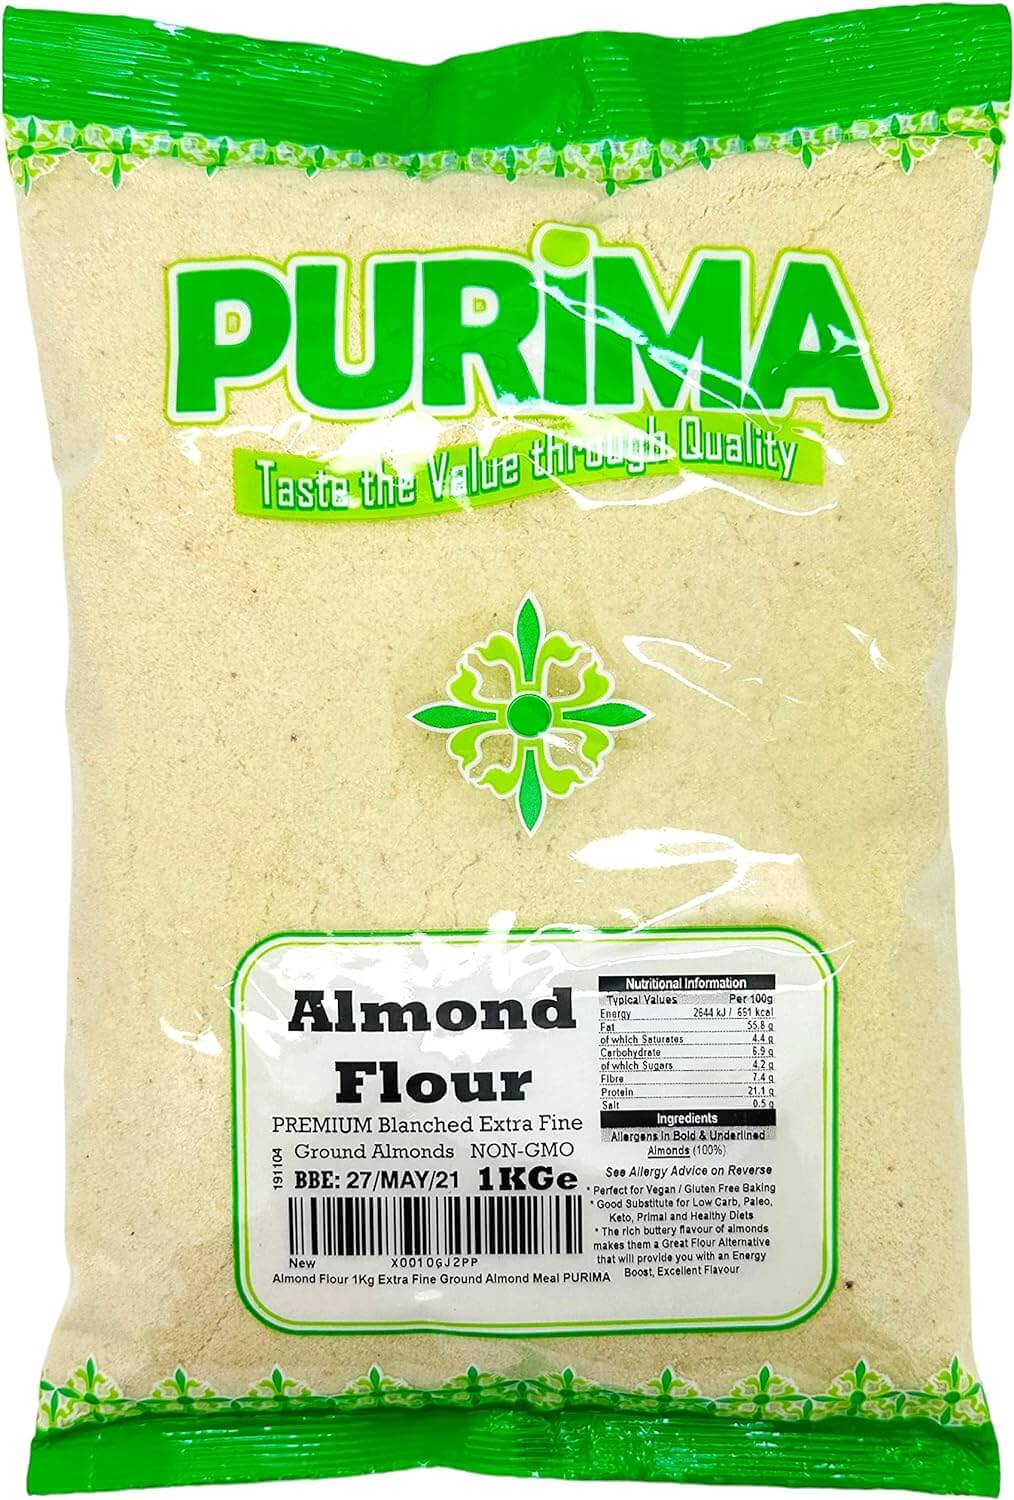 almond flour extra fine ground almond meal